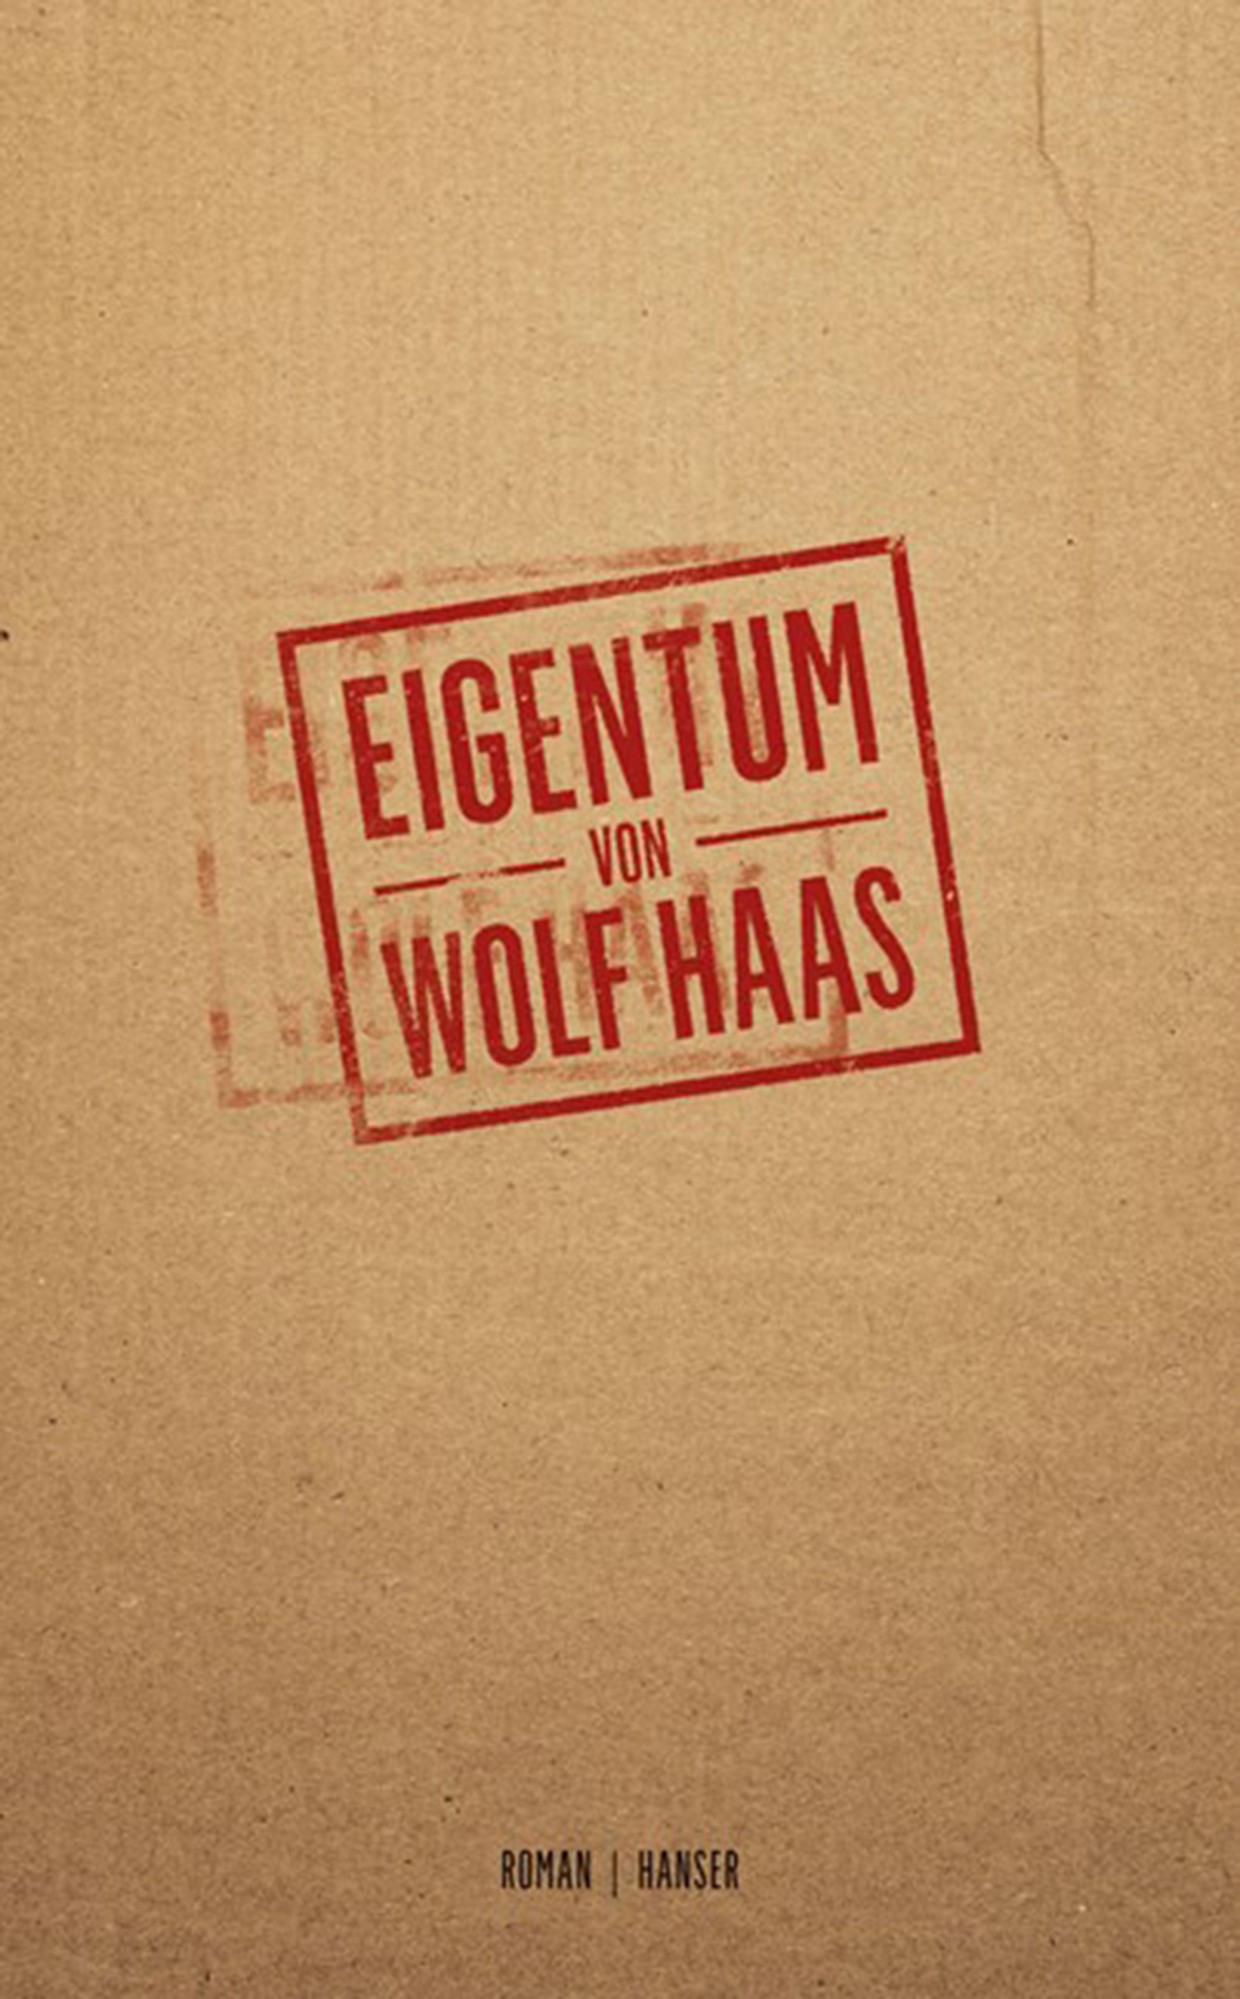 Cover des Buchtitels "Eigentum"